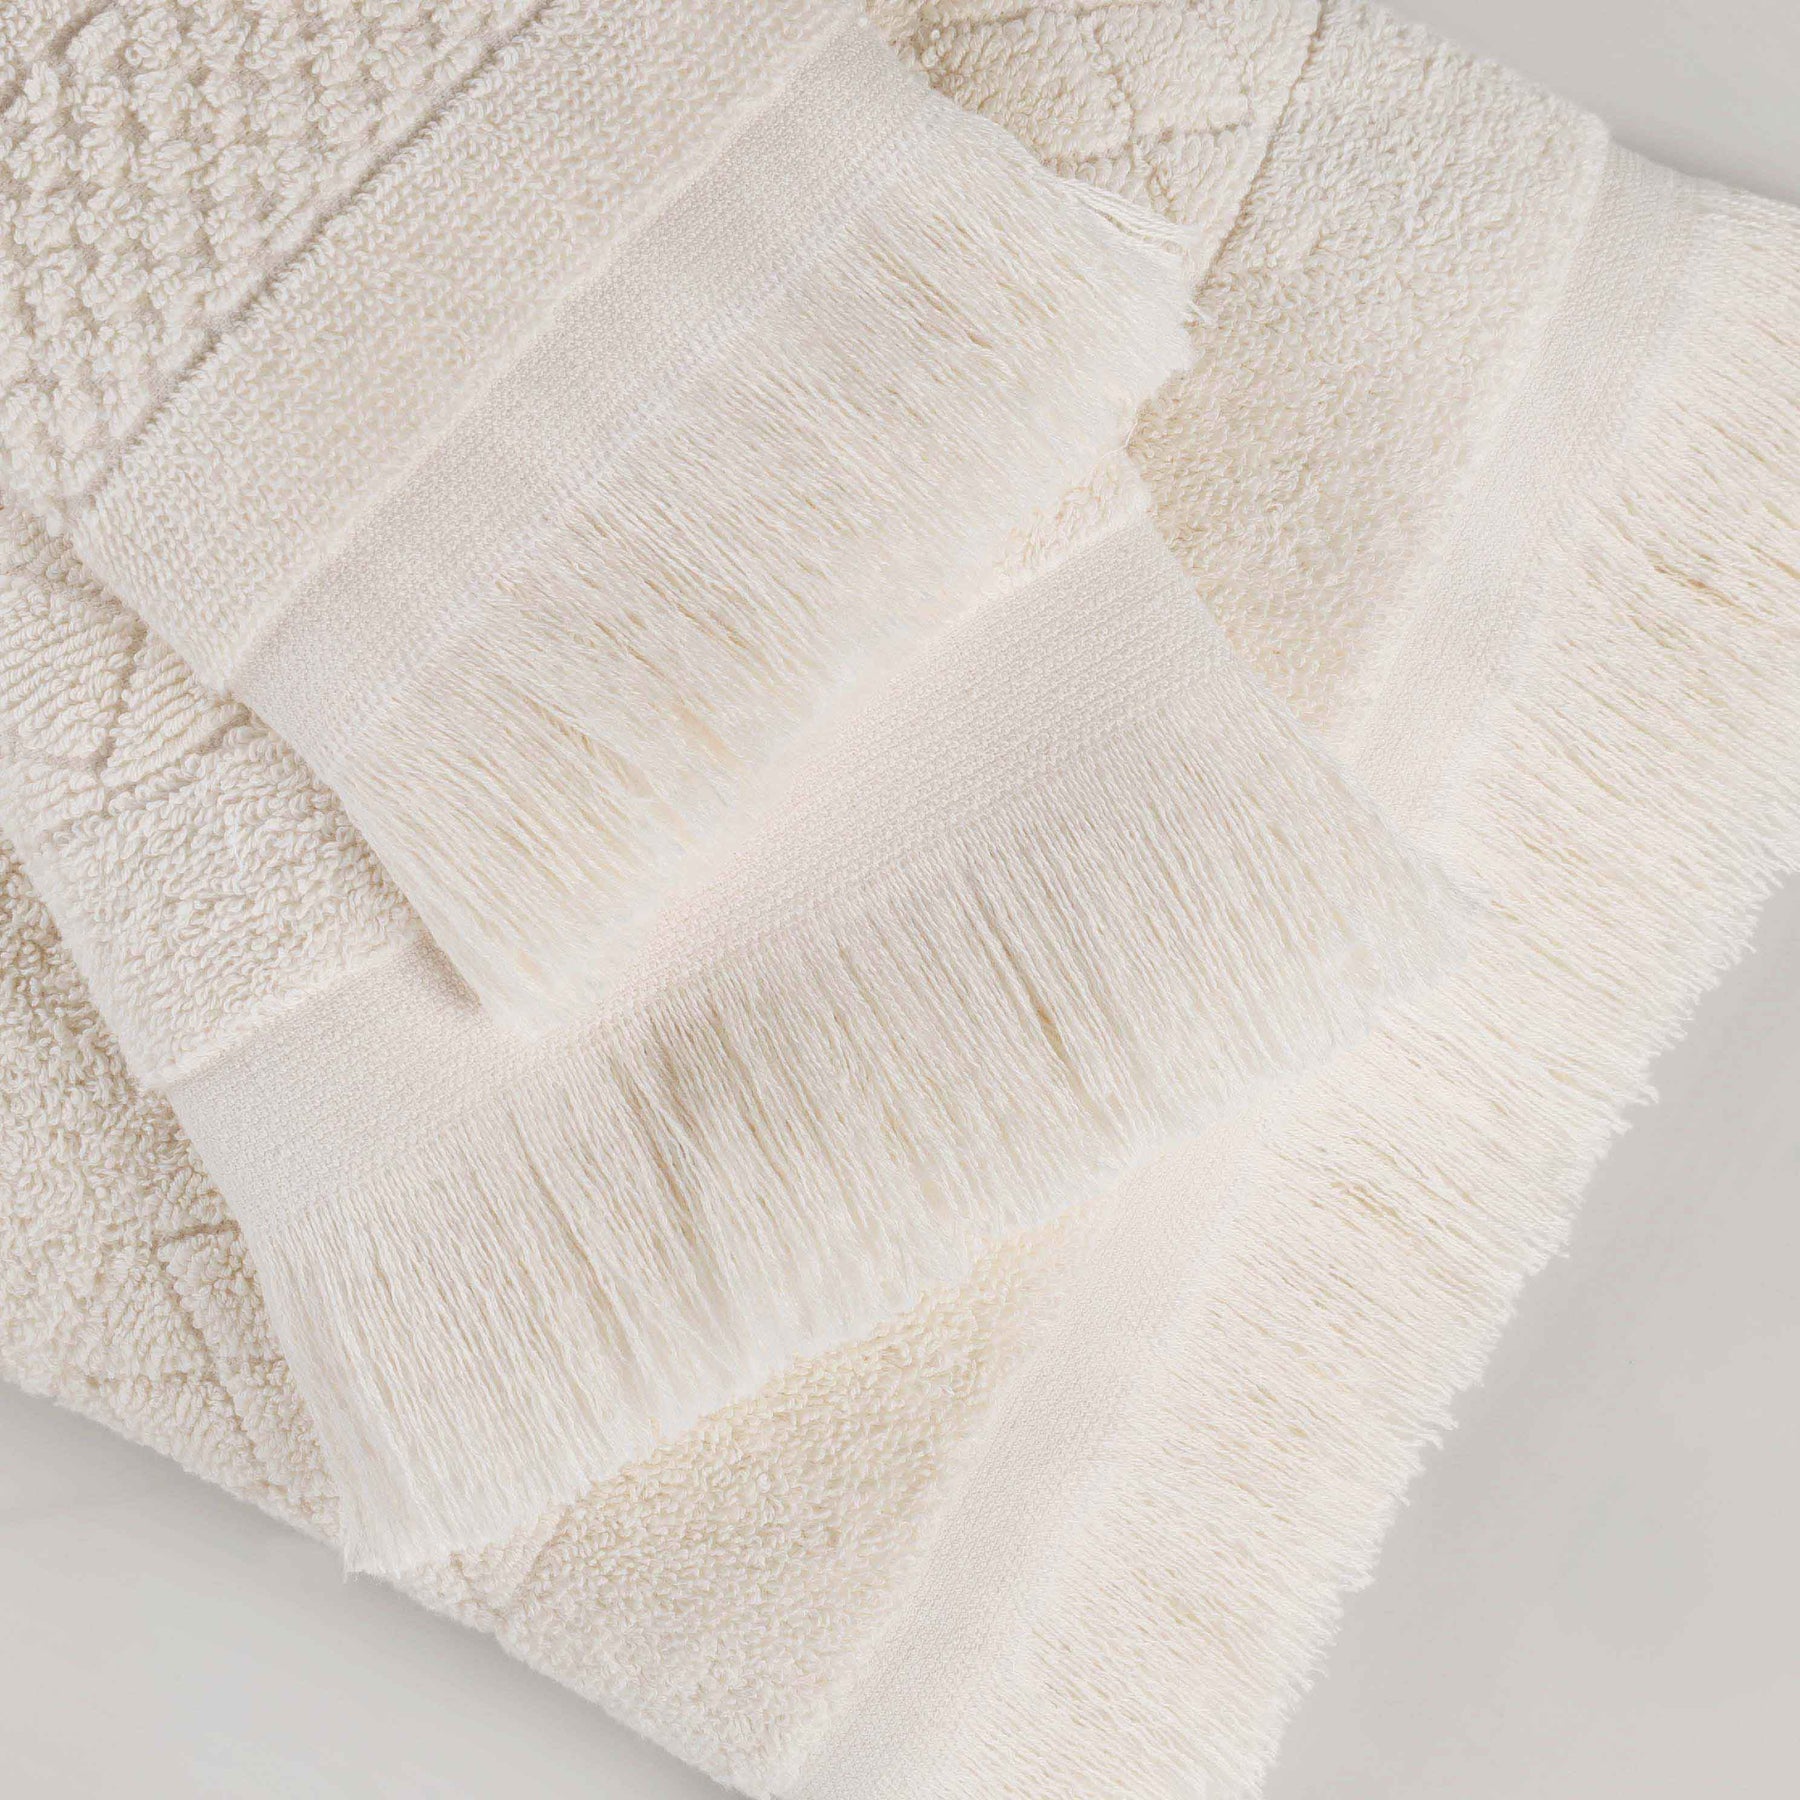 Rolla Cotton Geometric Jacquard Plush Absorbent Hand Towel - Ivory